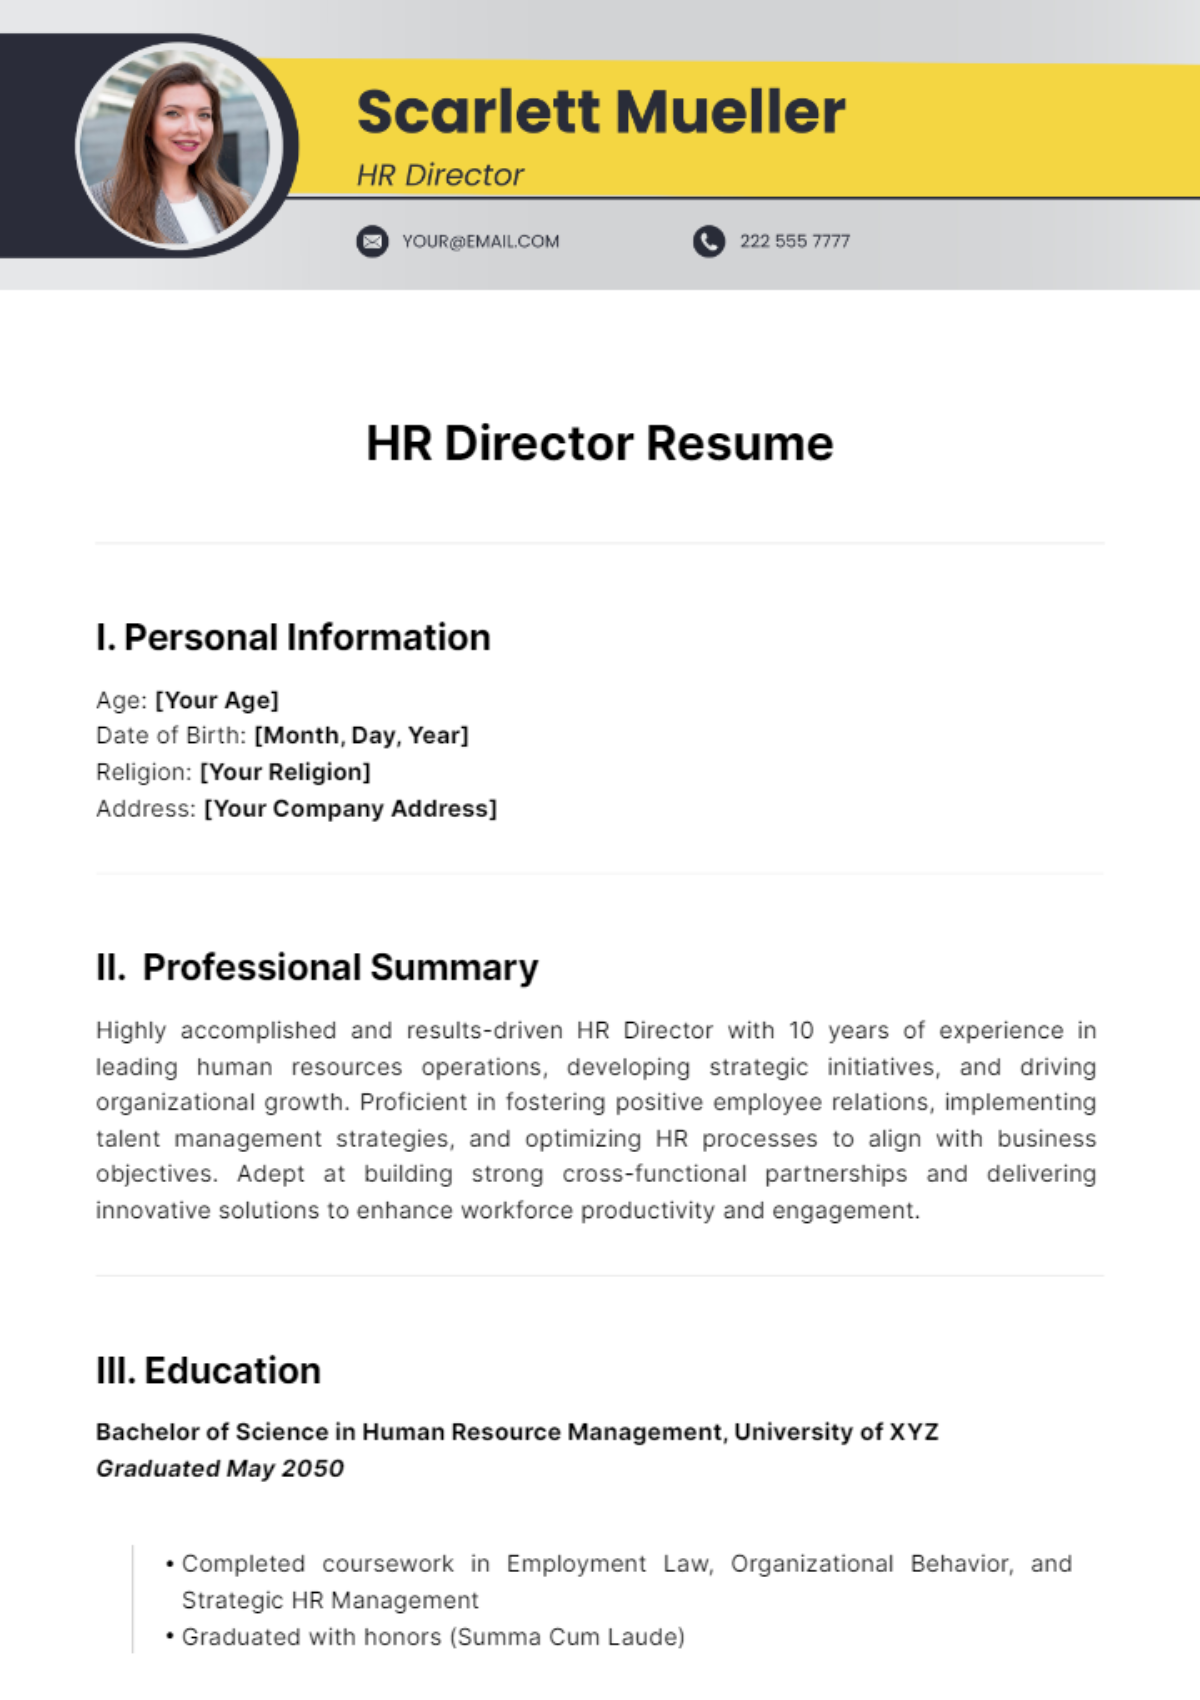 HR Director Resume Template